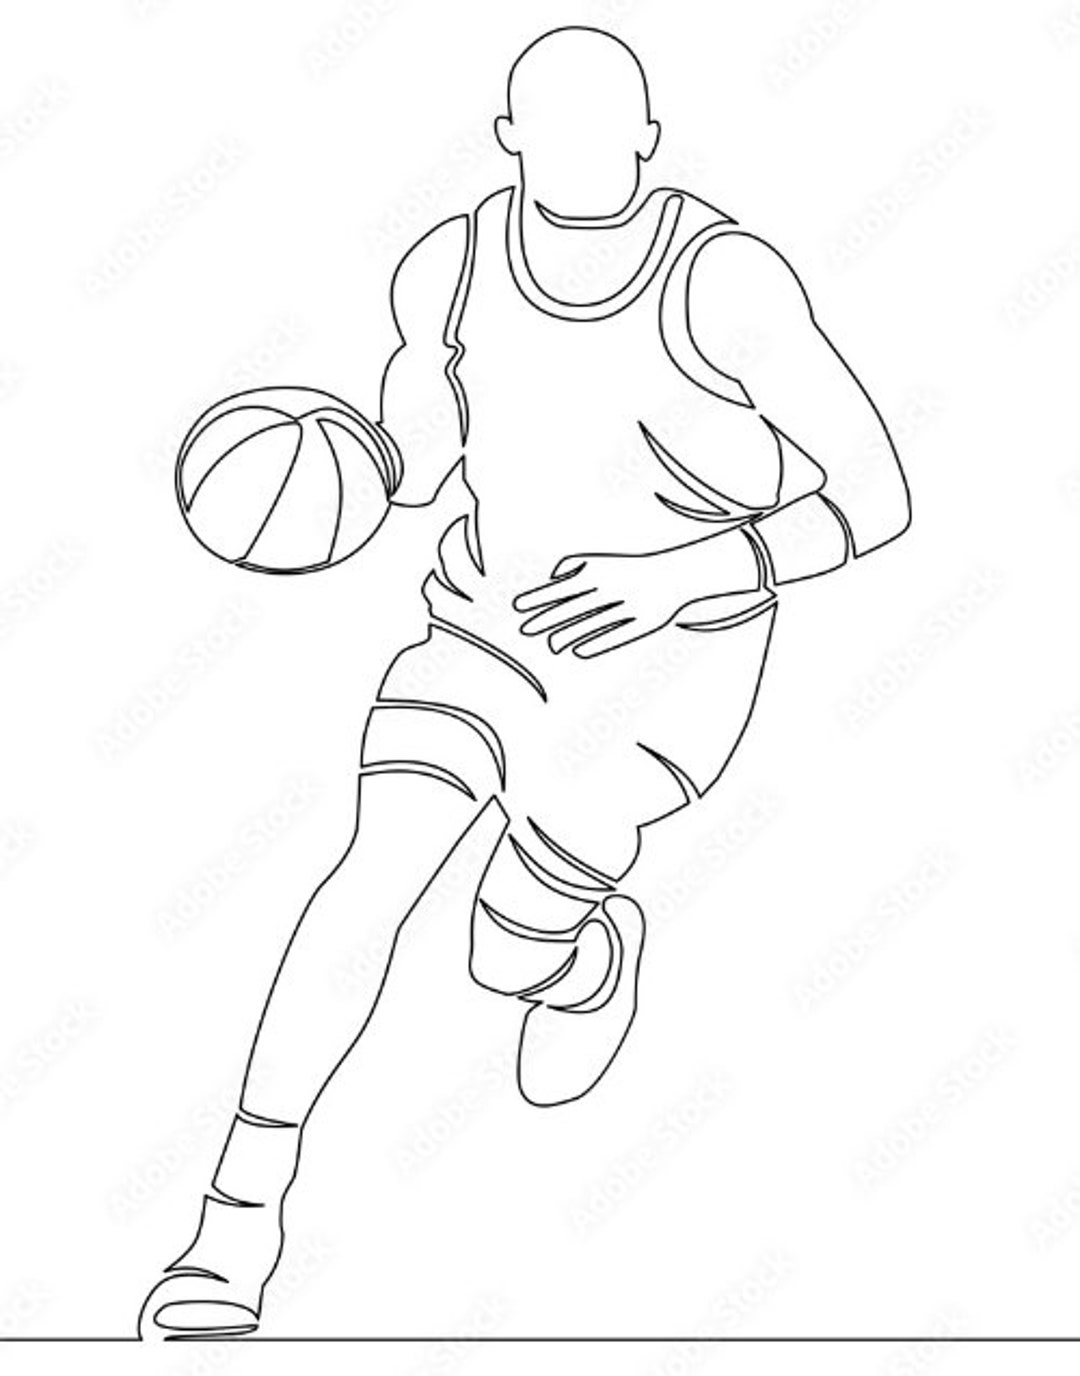 Premium Vector  Hand drawn basketball player dunk line art vector style